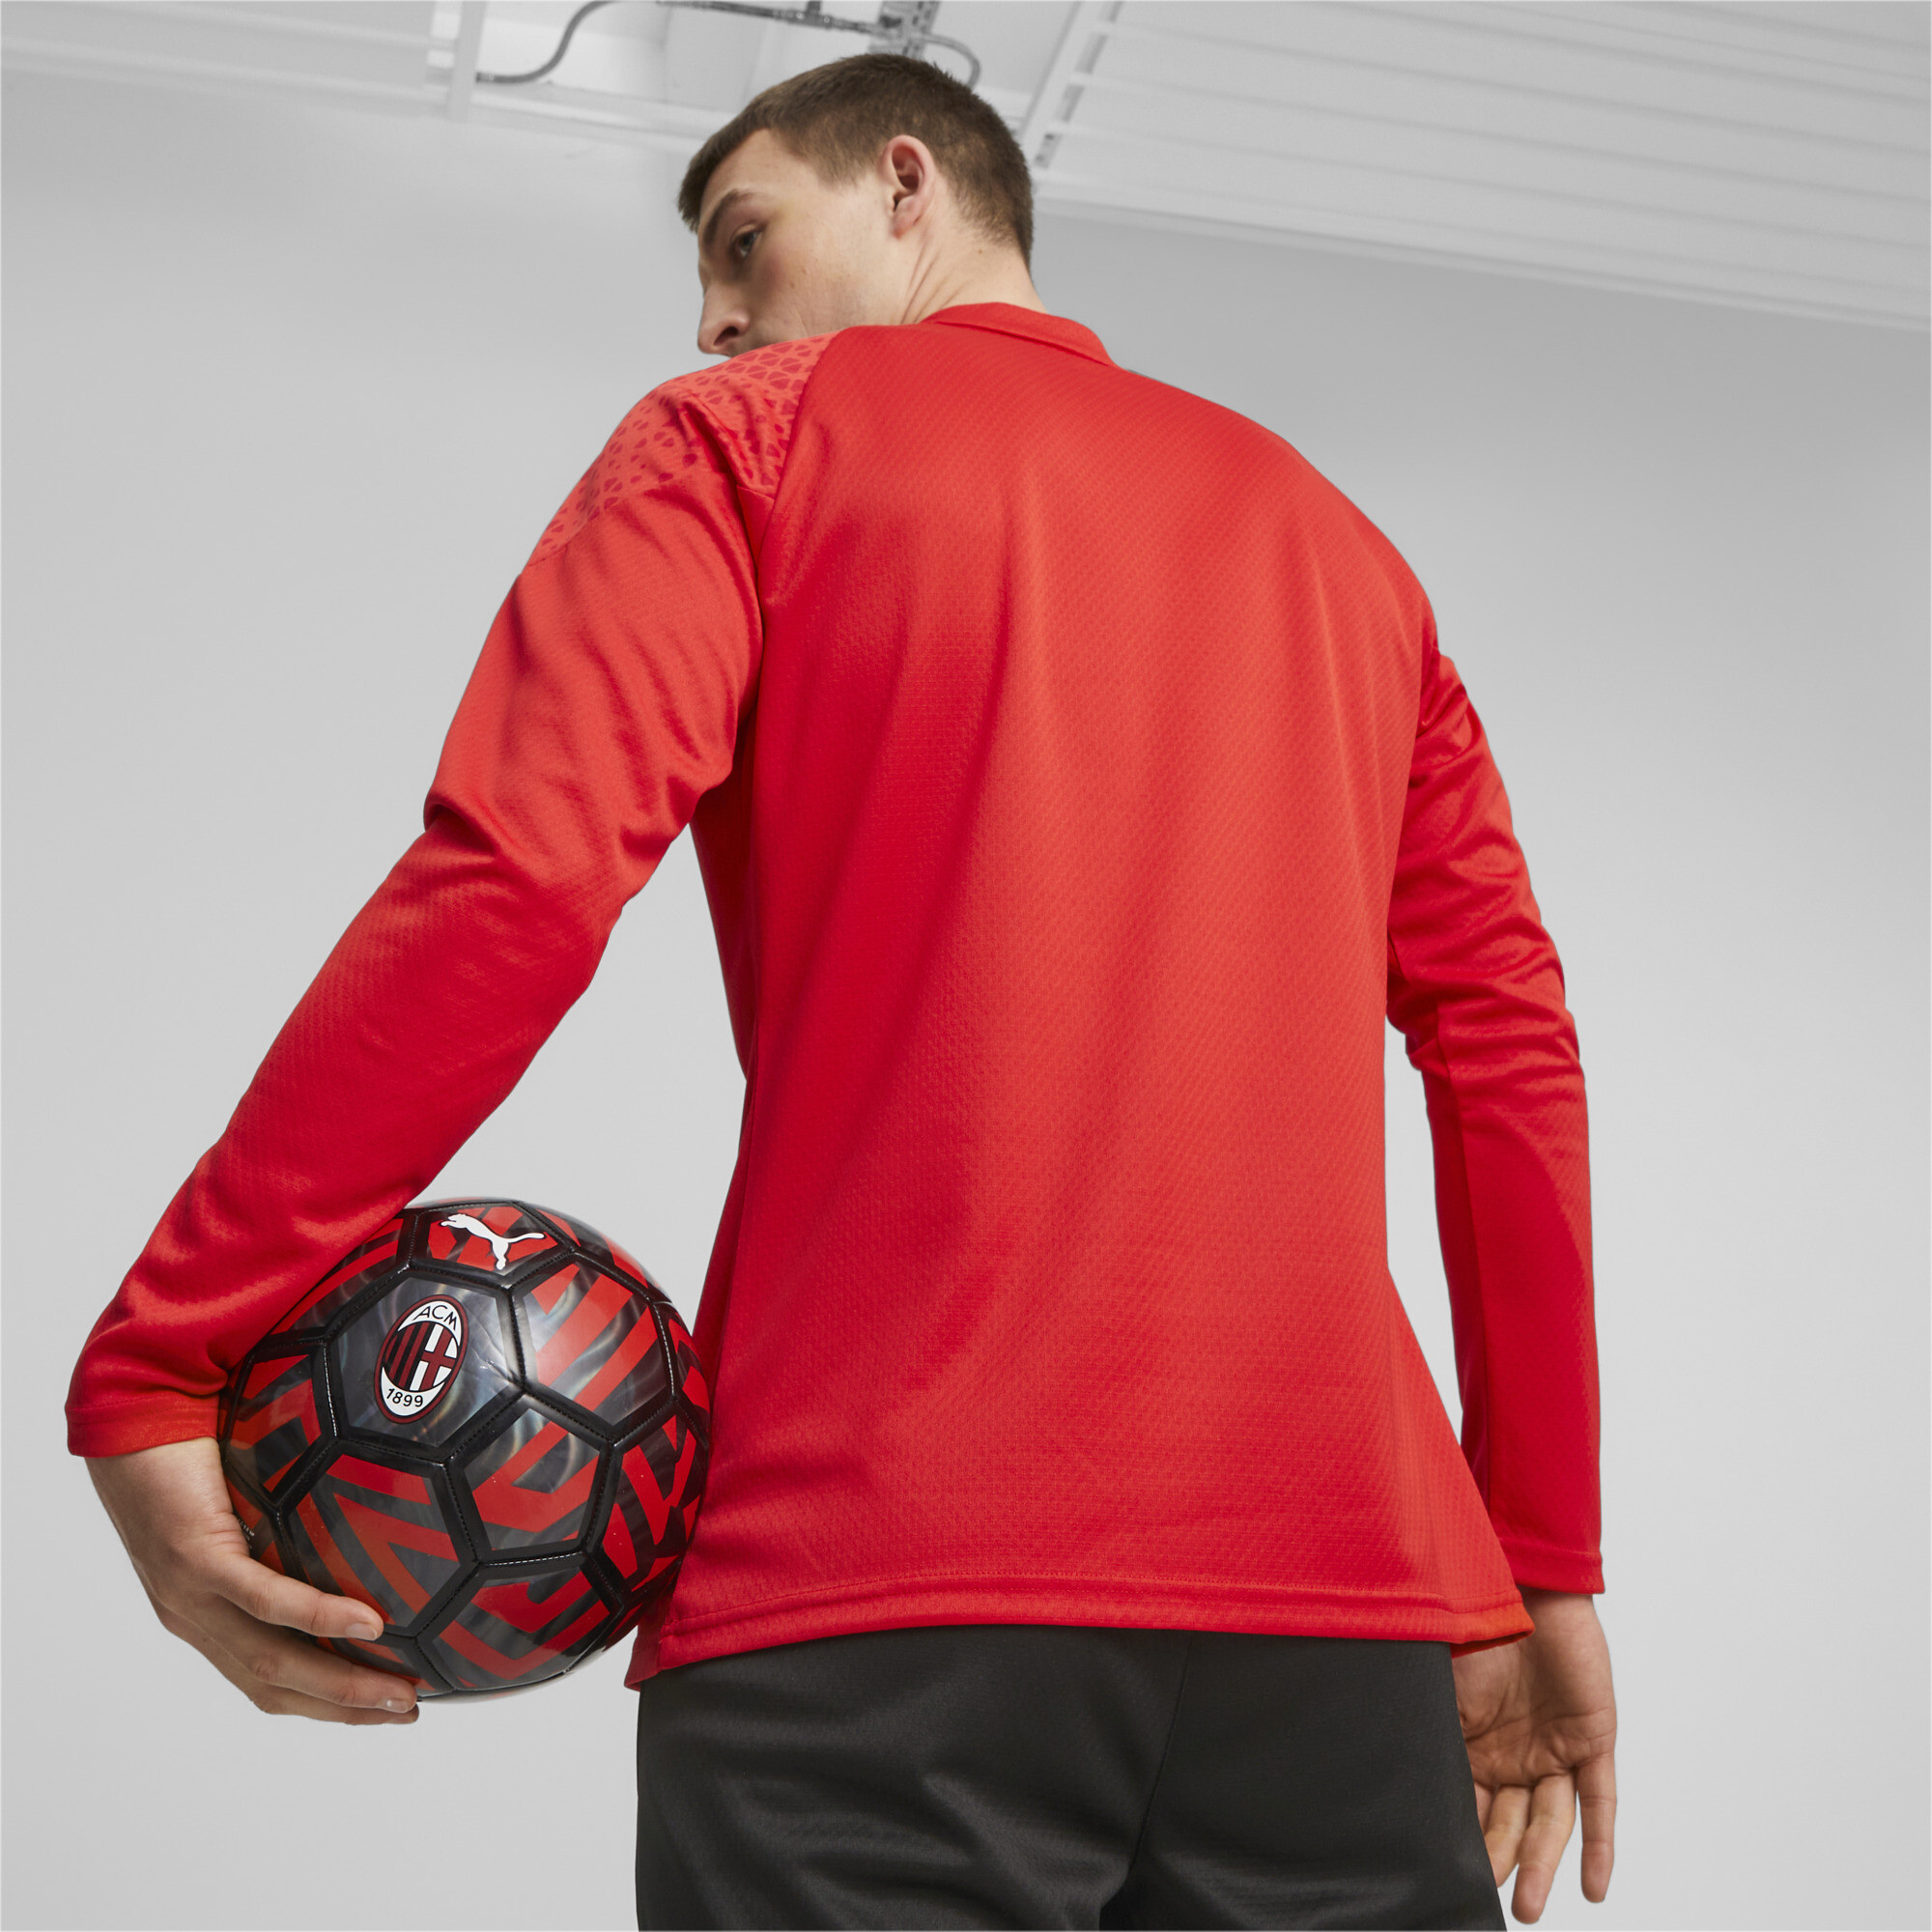 Men's Puma AC Milan Football Training Quarter-zip Top, Red Top, Size 3XL Top, Clothing